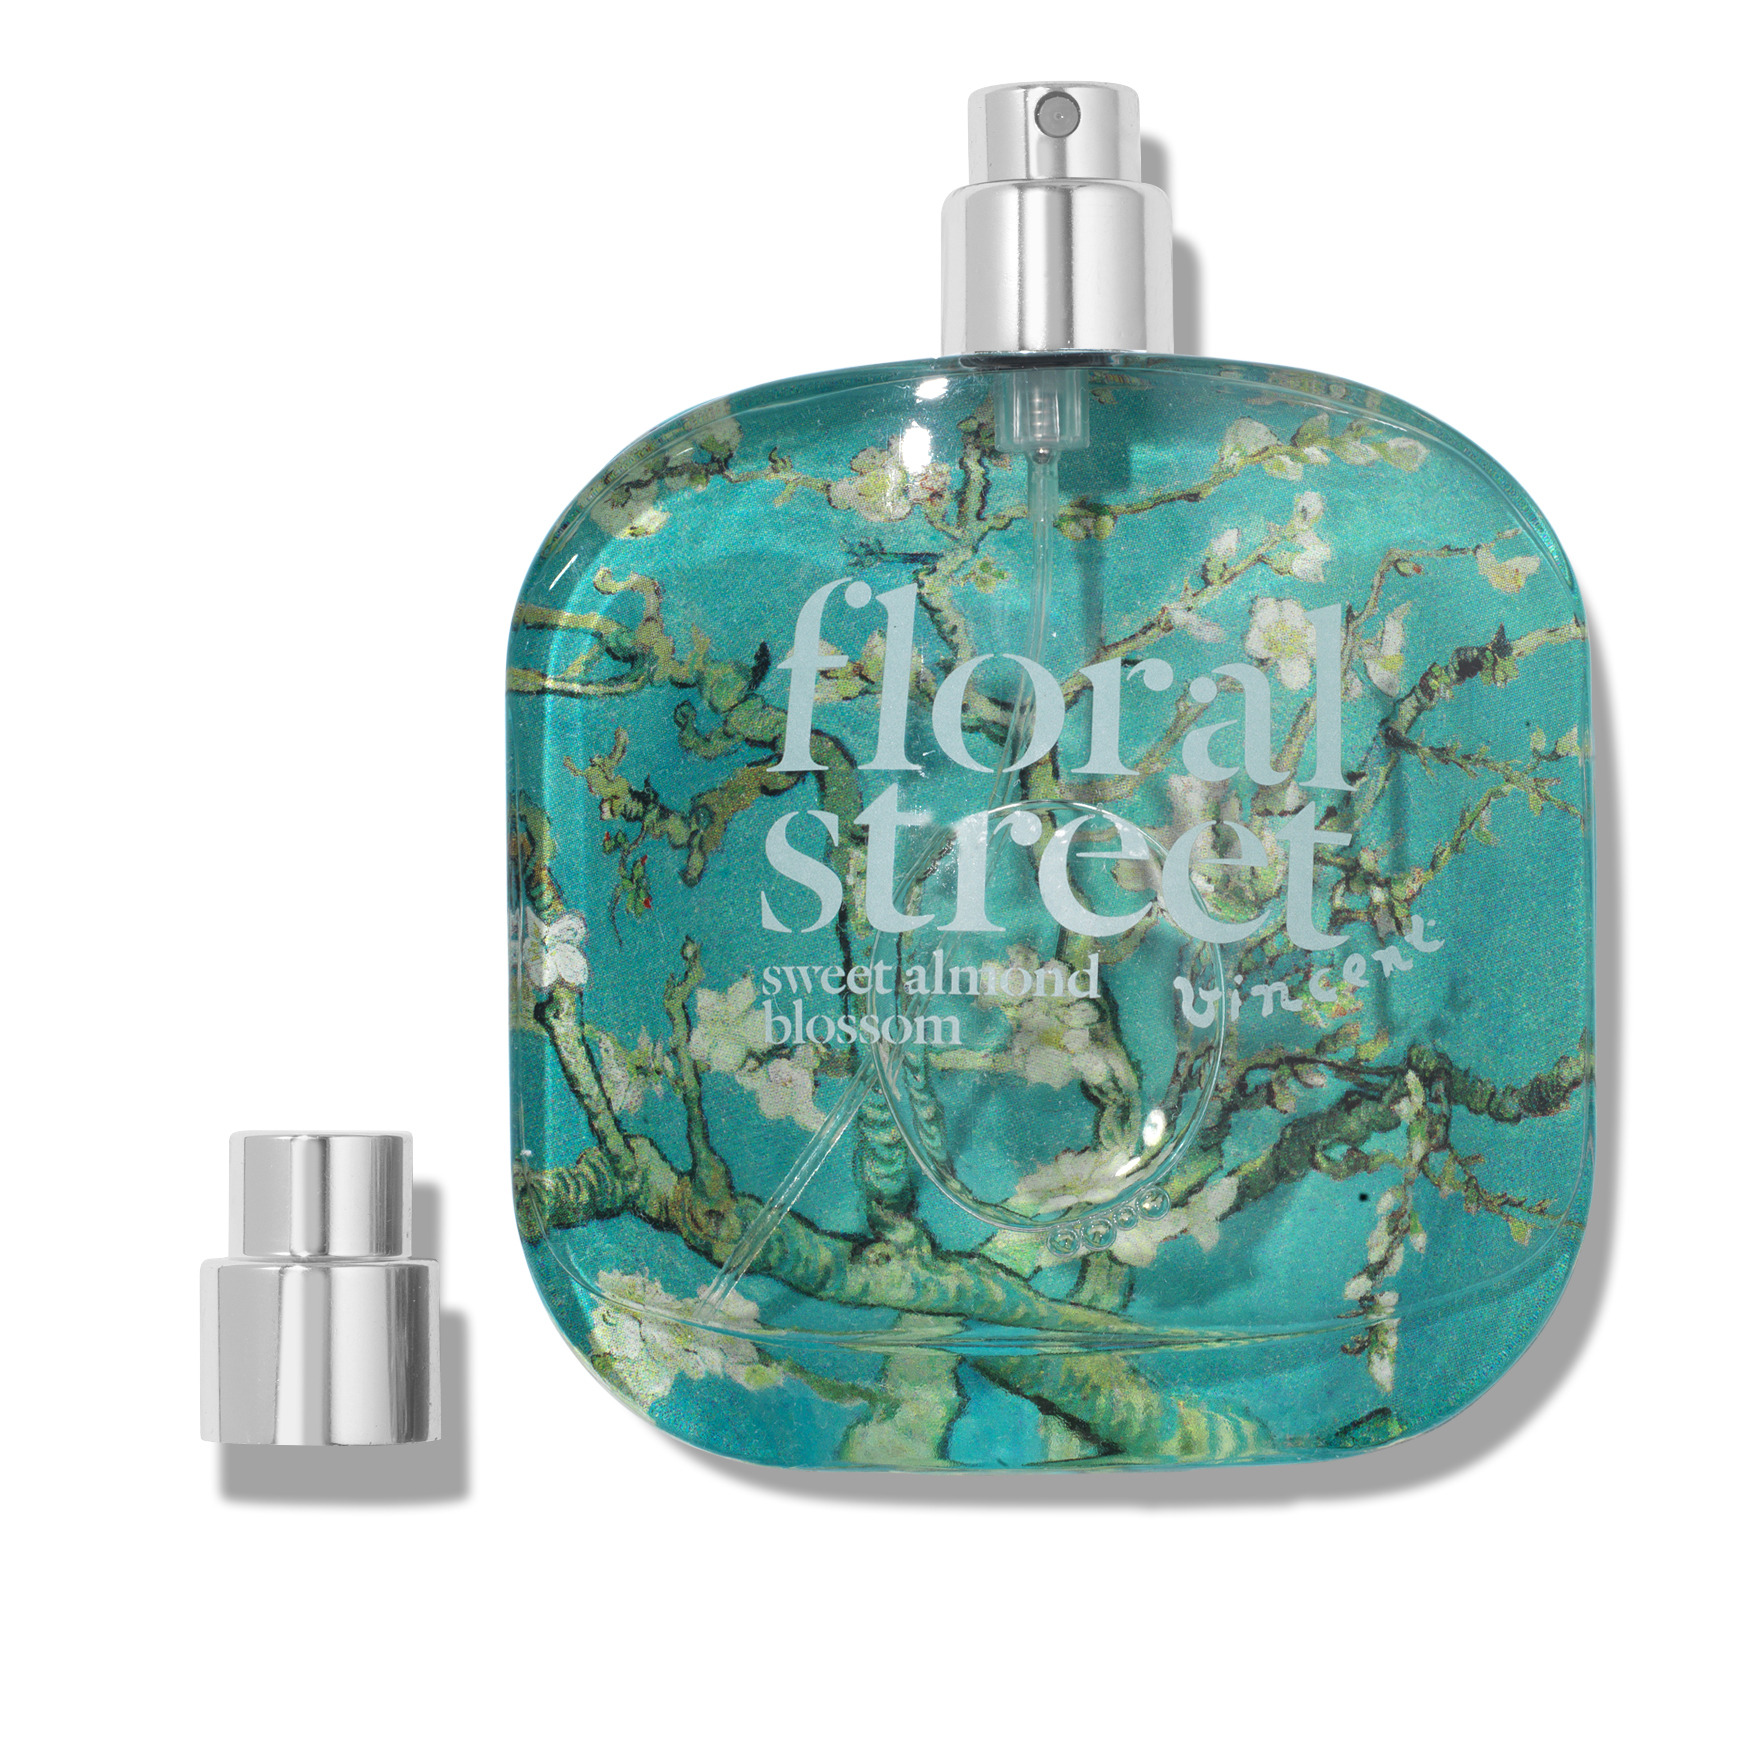 Floral Street Sweet Almond Blossom Eau de Parfum